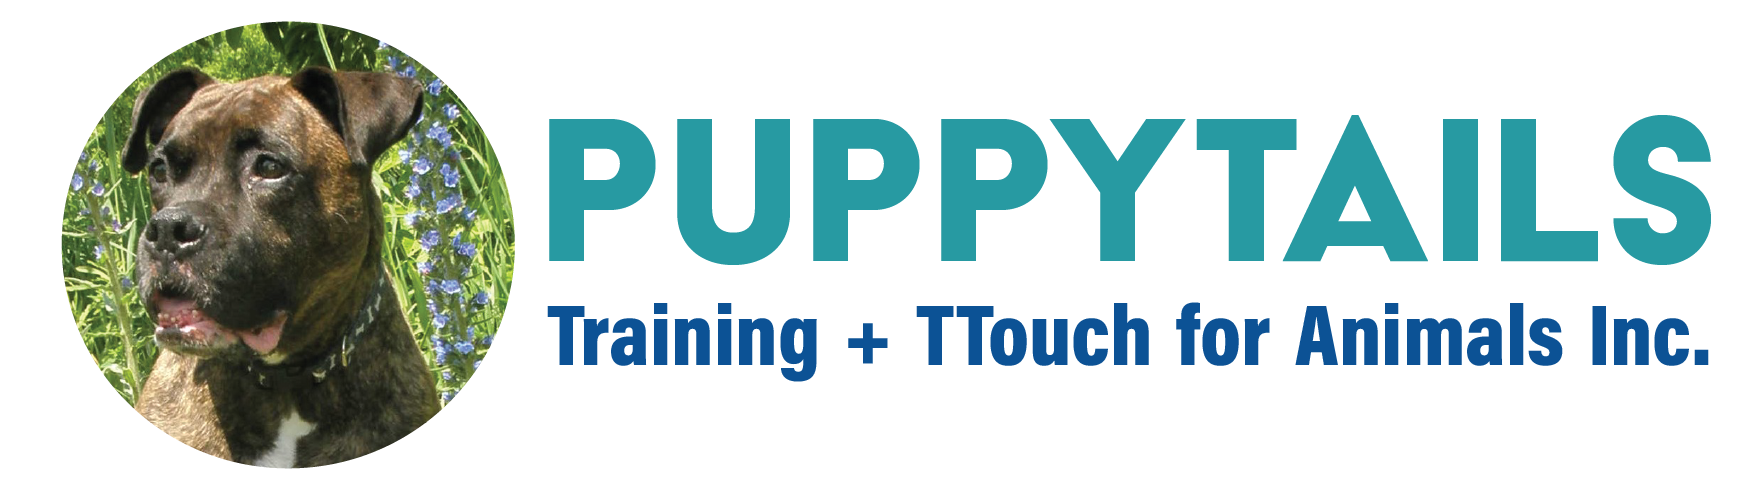 Puppy Tails Dog Training Orangeville, Guelph, GTA